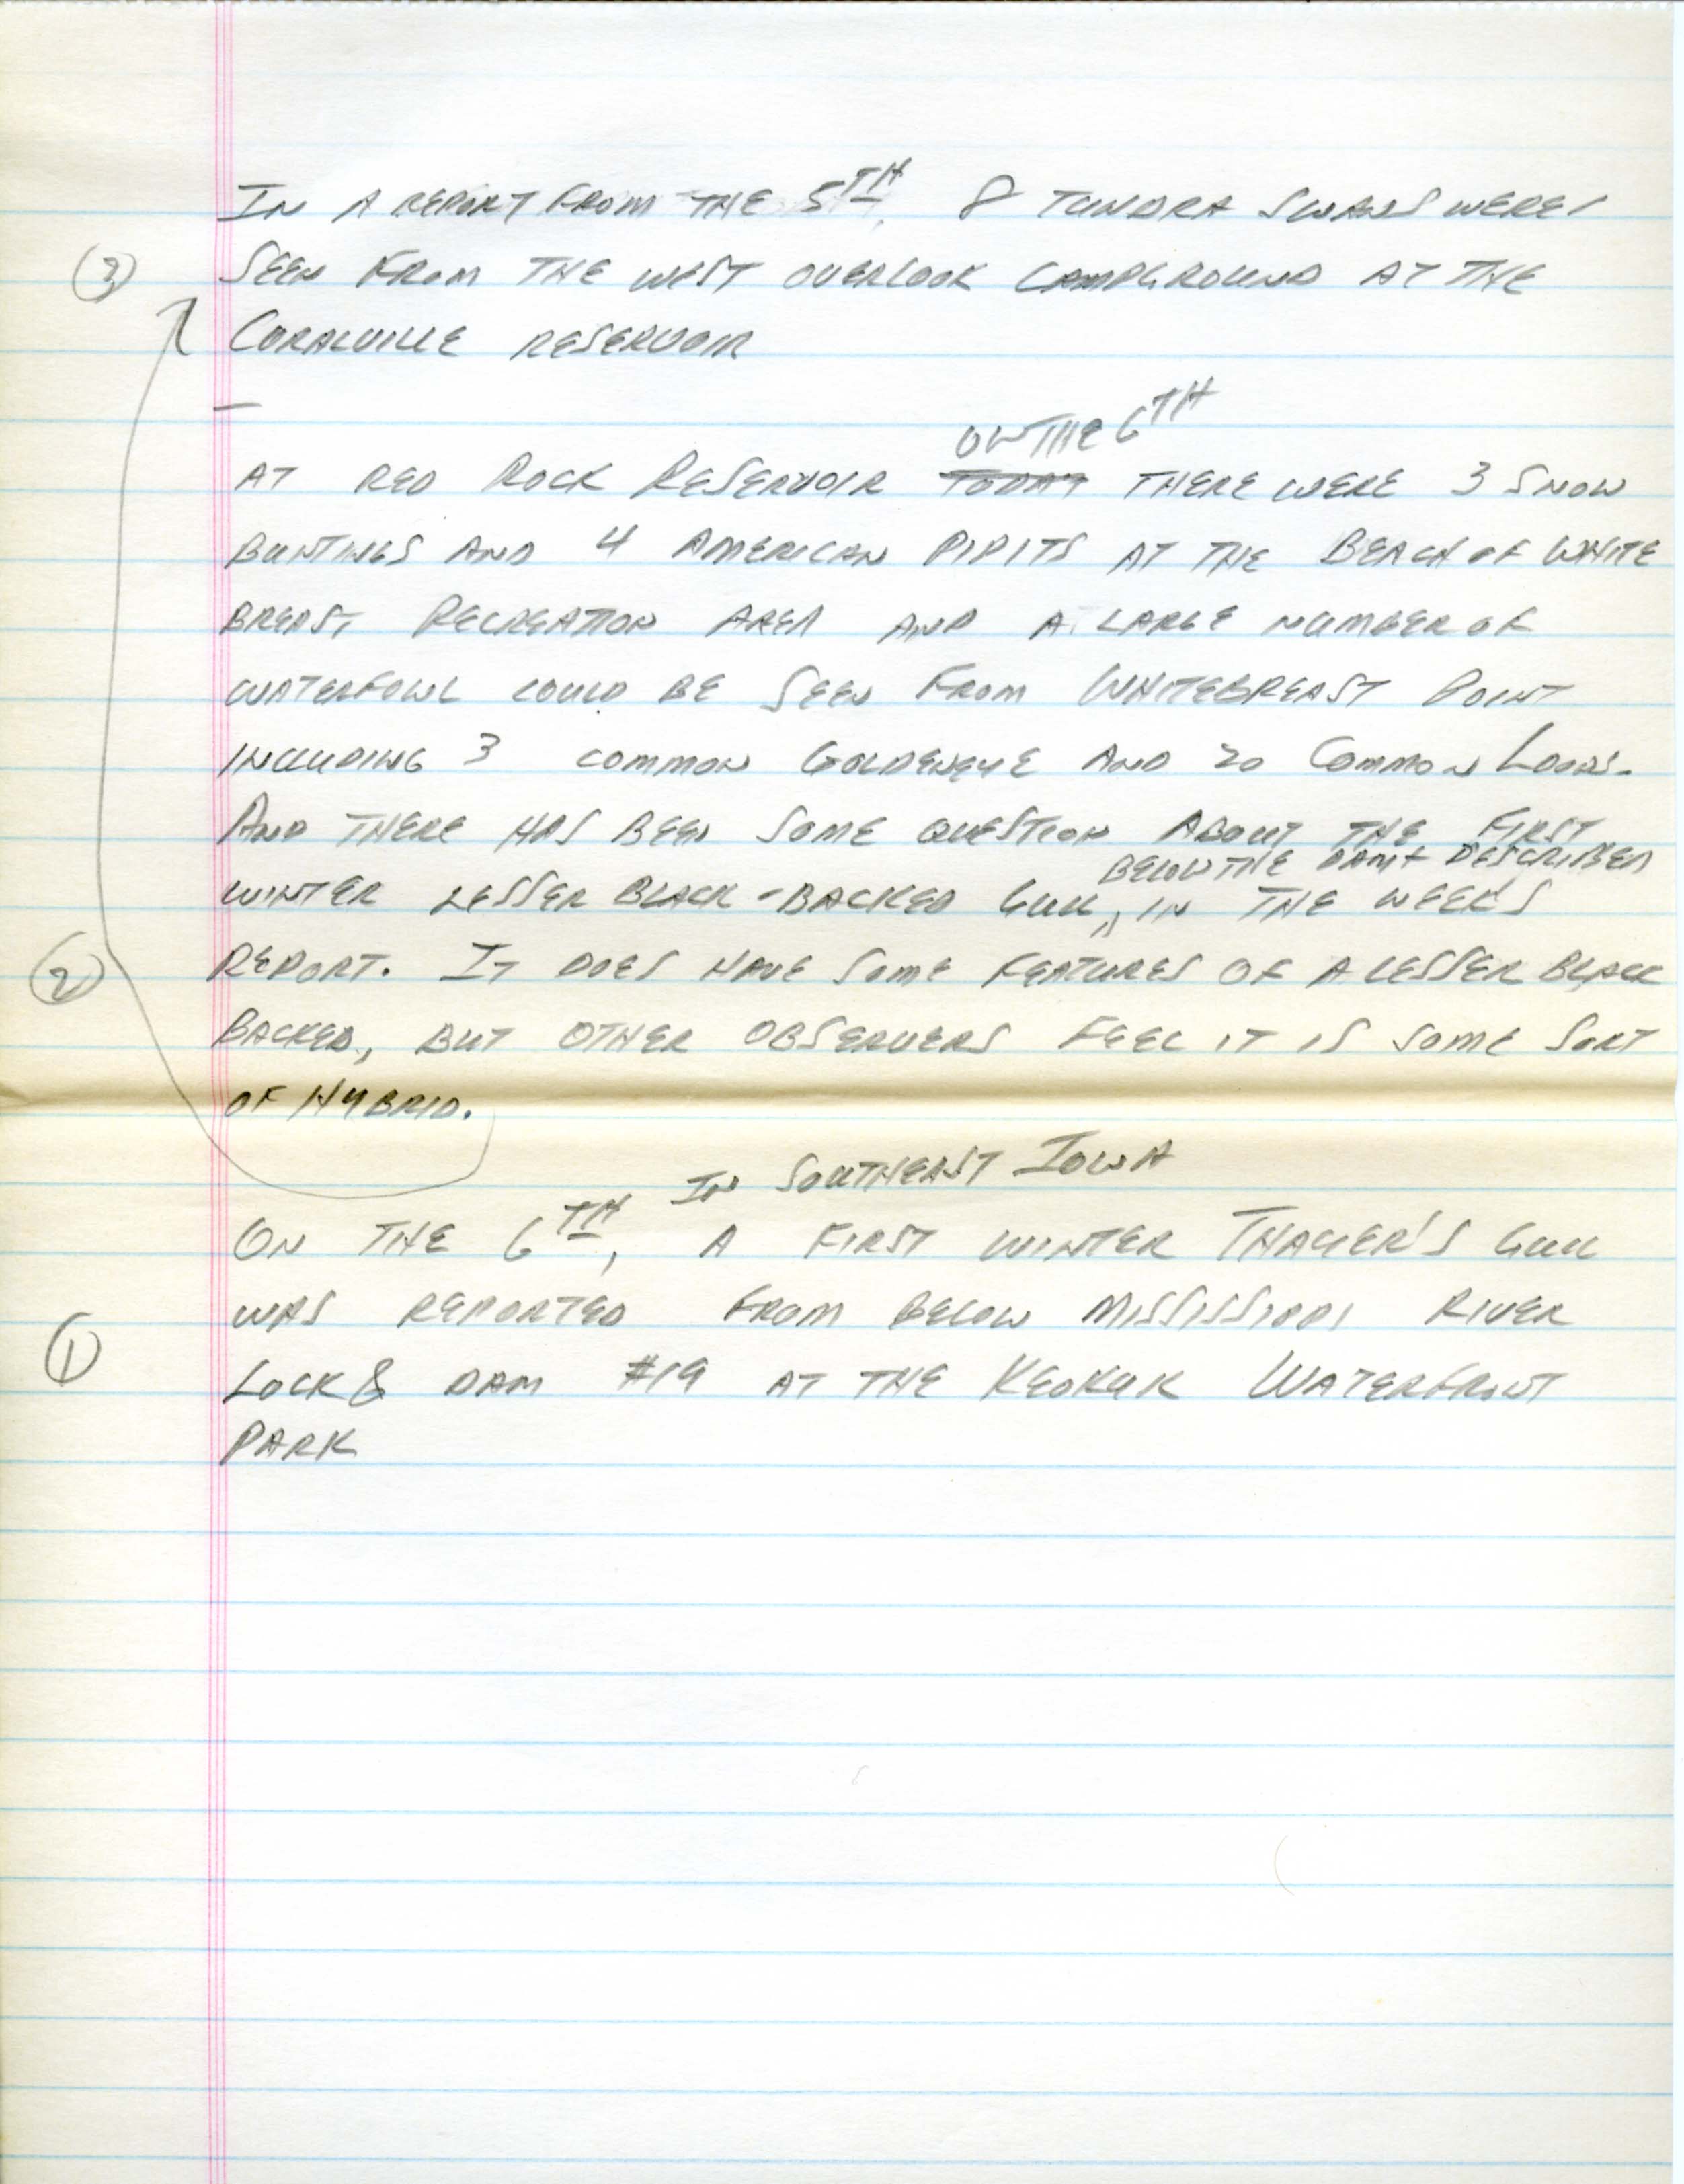 Iowa Birdline update, circa November 6, 1990, notes